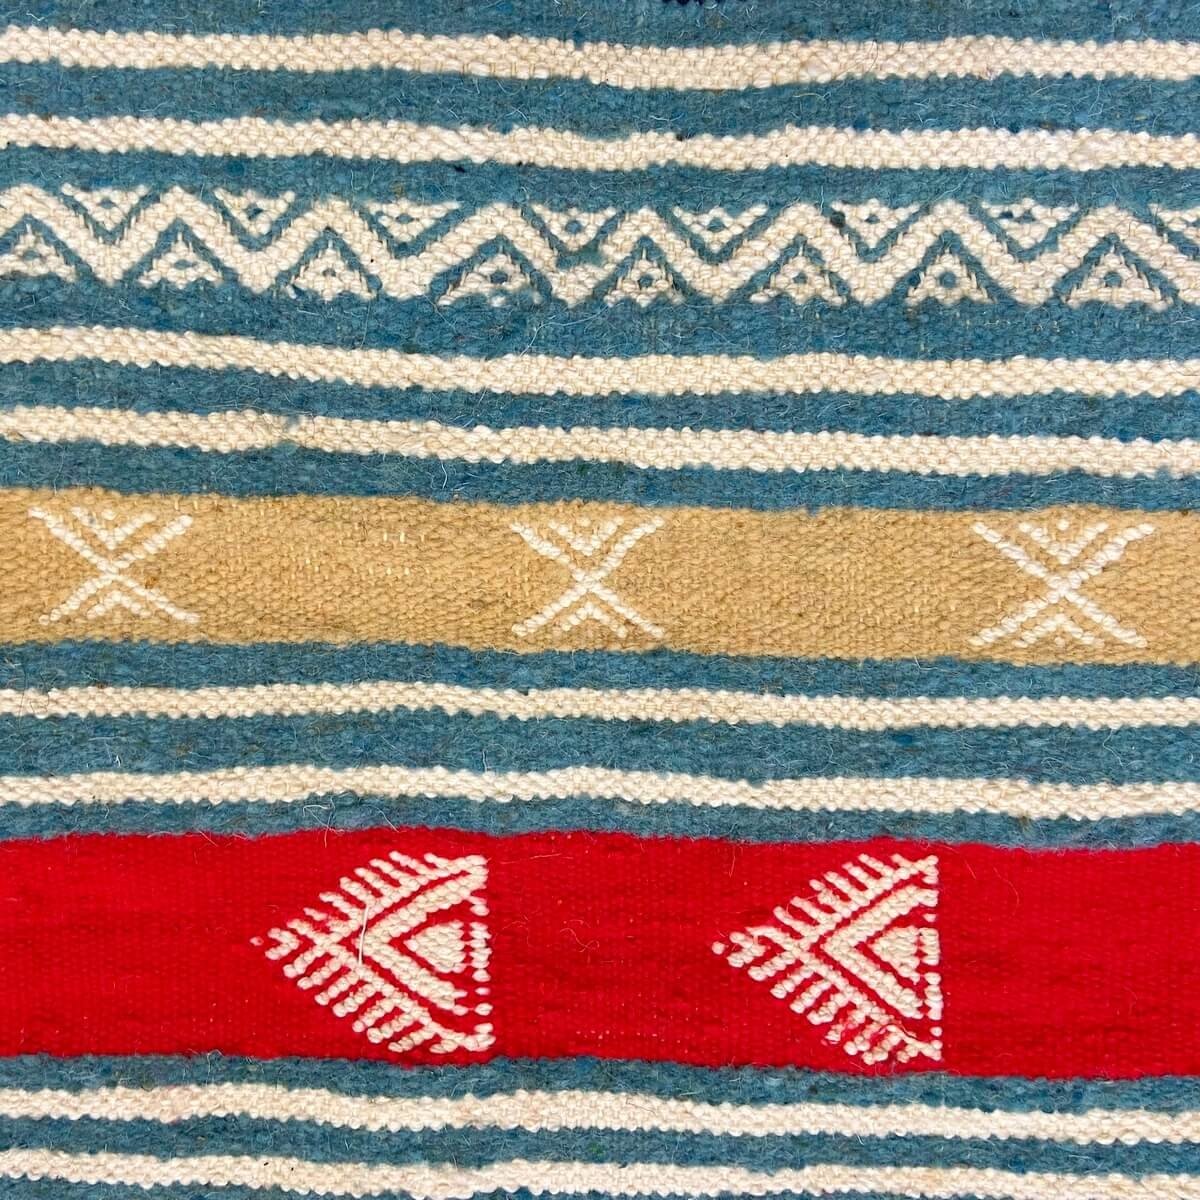 Berber tapijt Tapijt Kilim Ebeles 56x116 Turkoois/Jeel/Rood (Handgeweven, Wol, Tunesië) Tunesisch kilimdeken, Marokkaanse stijl.